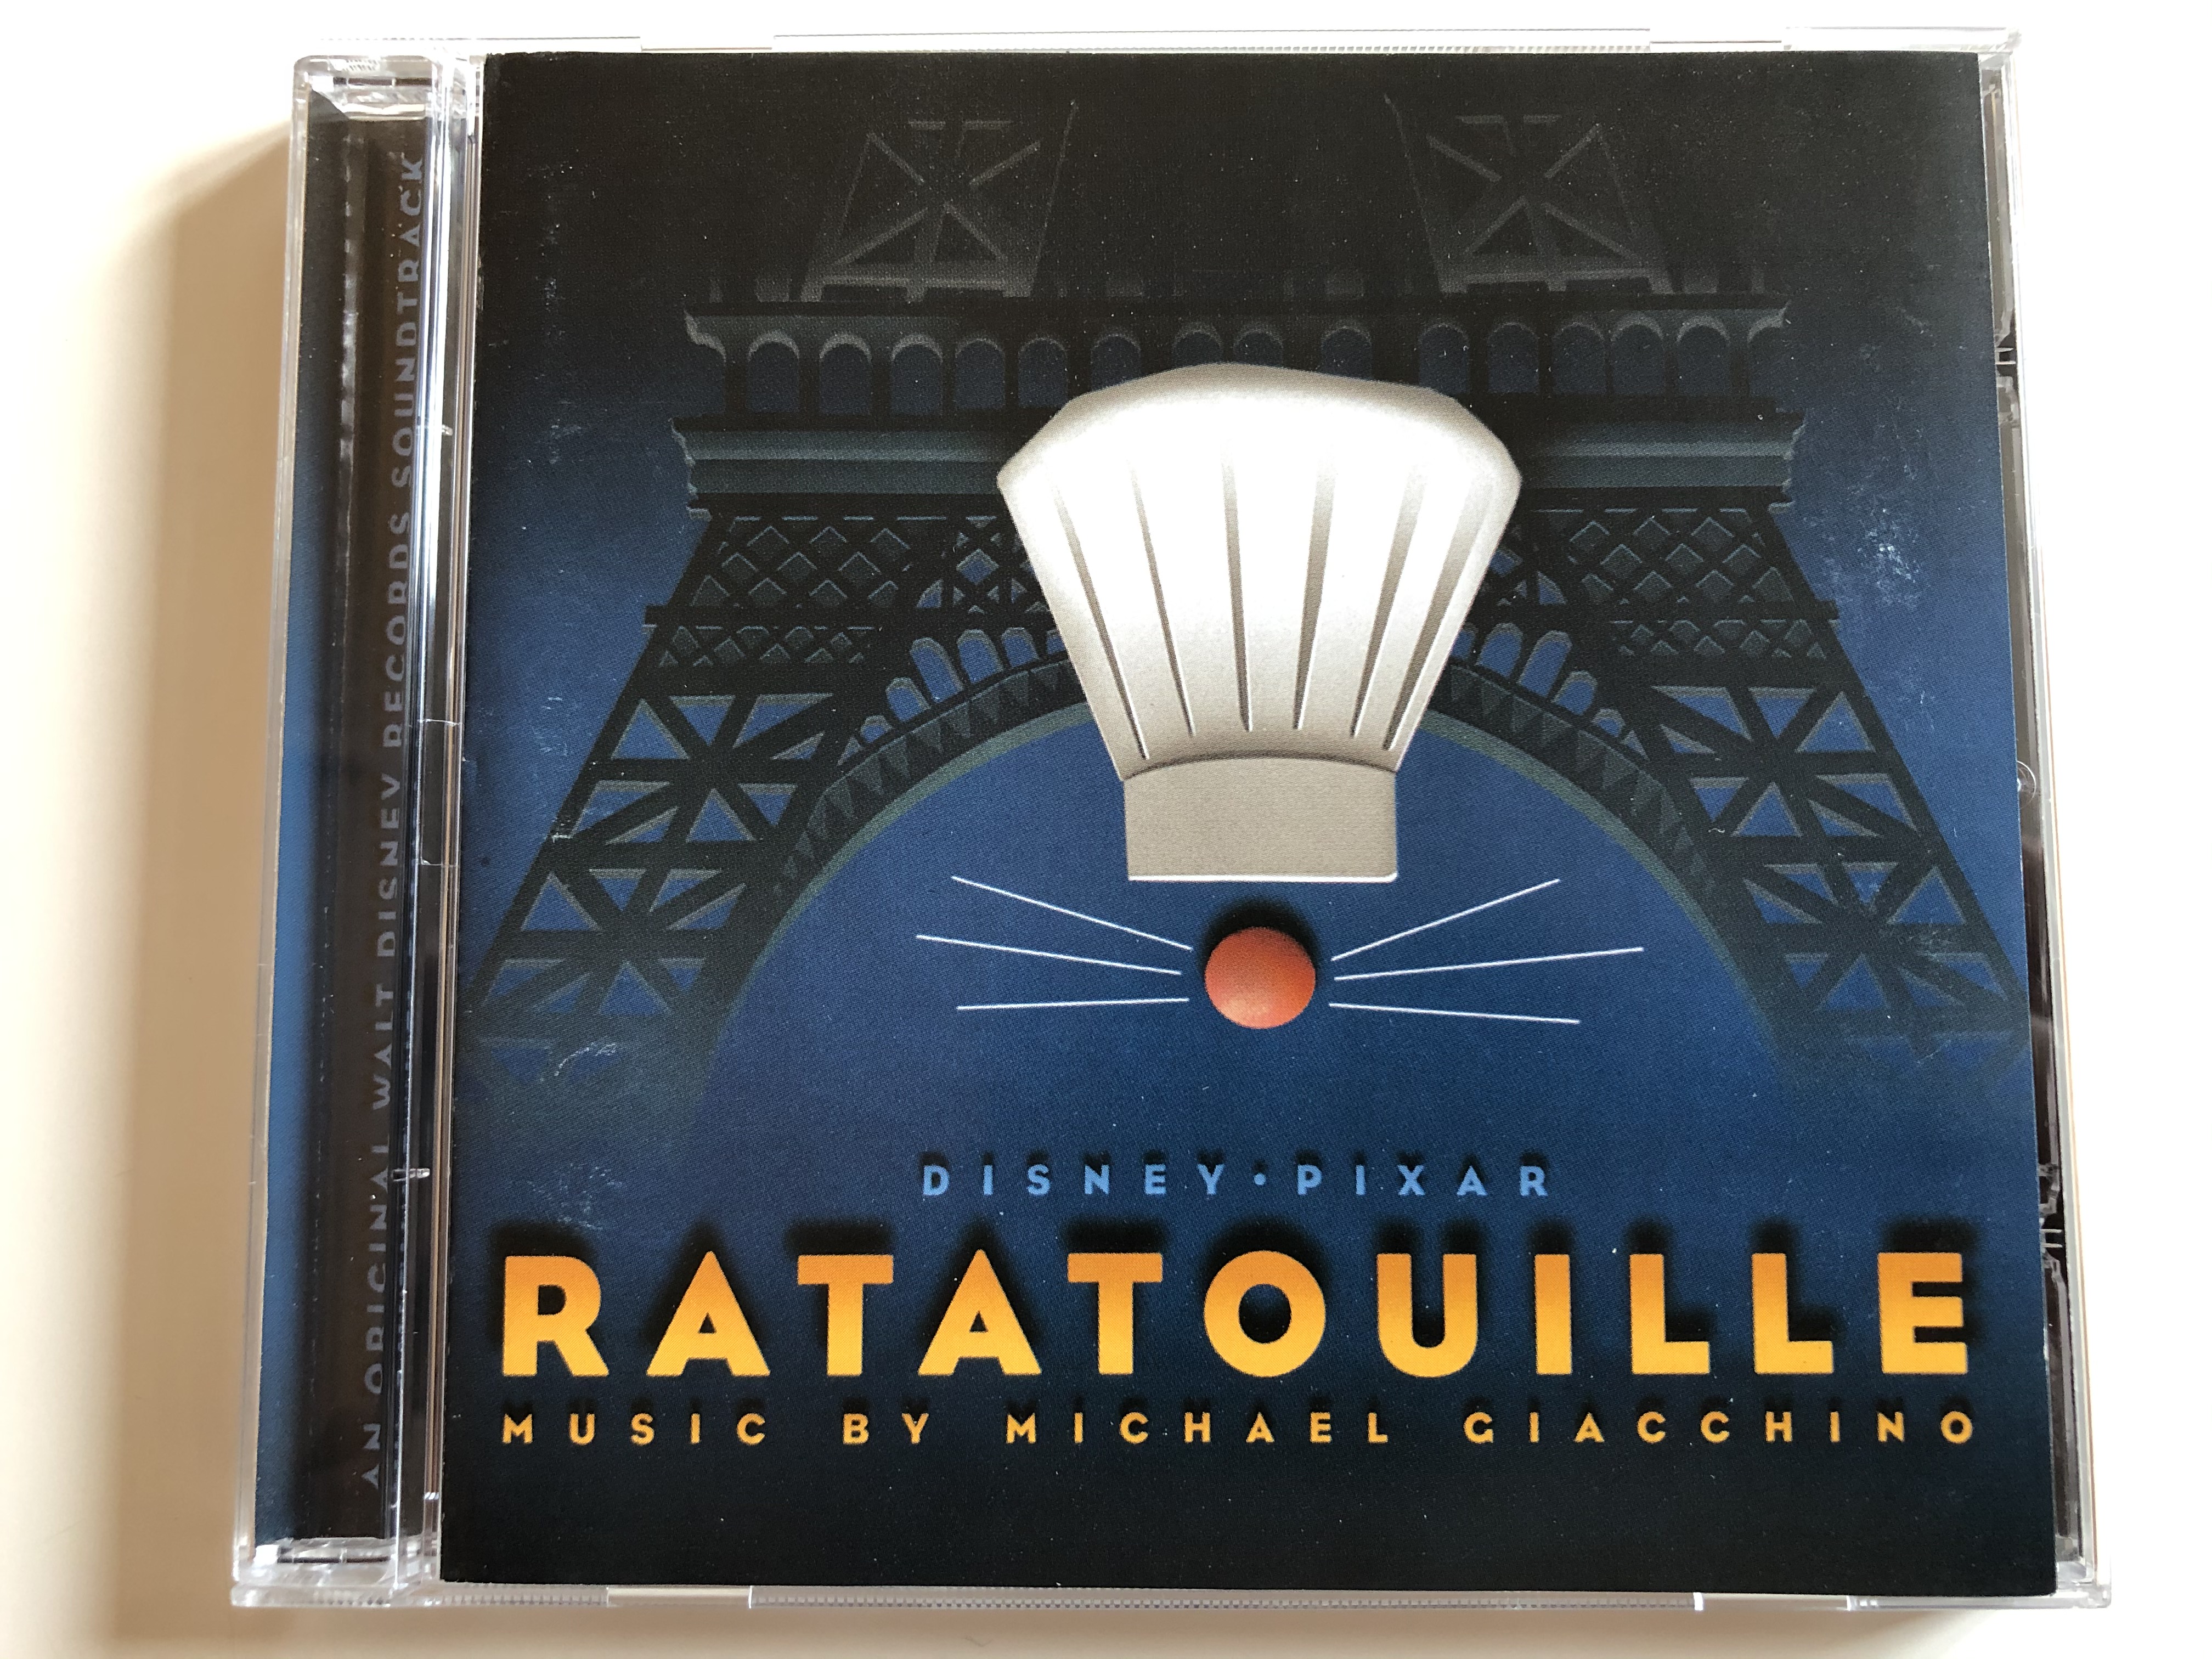 ratatouille-music-by-michael-giacchino-disney-pixar-walt-disney-records-audio-cd-2007-094639719624-1-.jpg